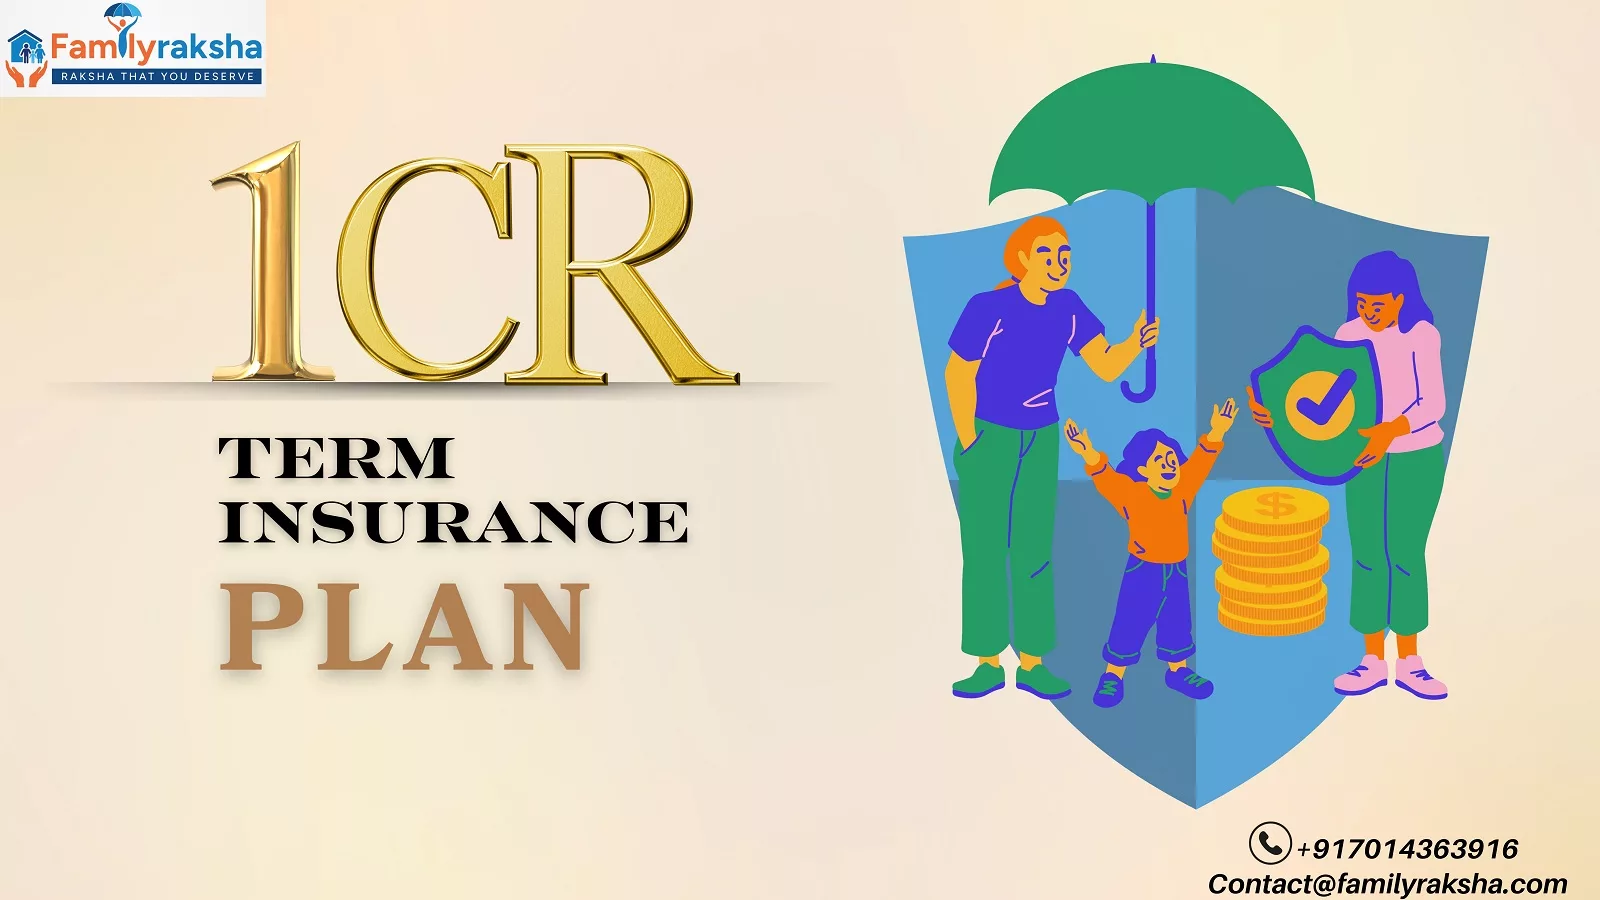 1 Crore Term Insurance Plan in India